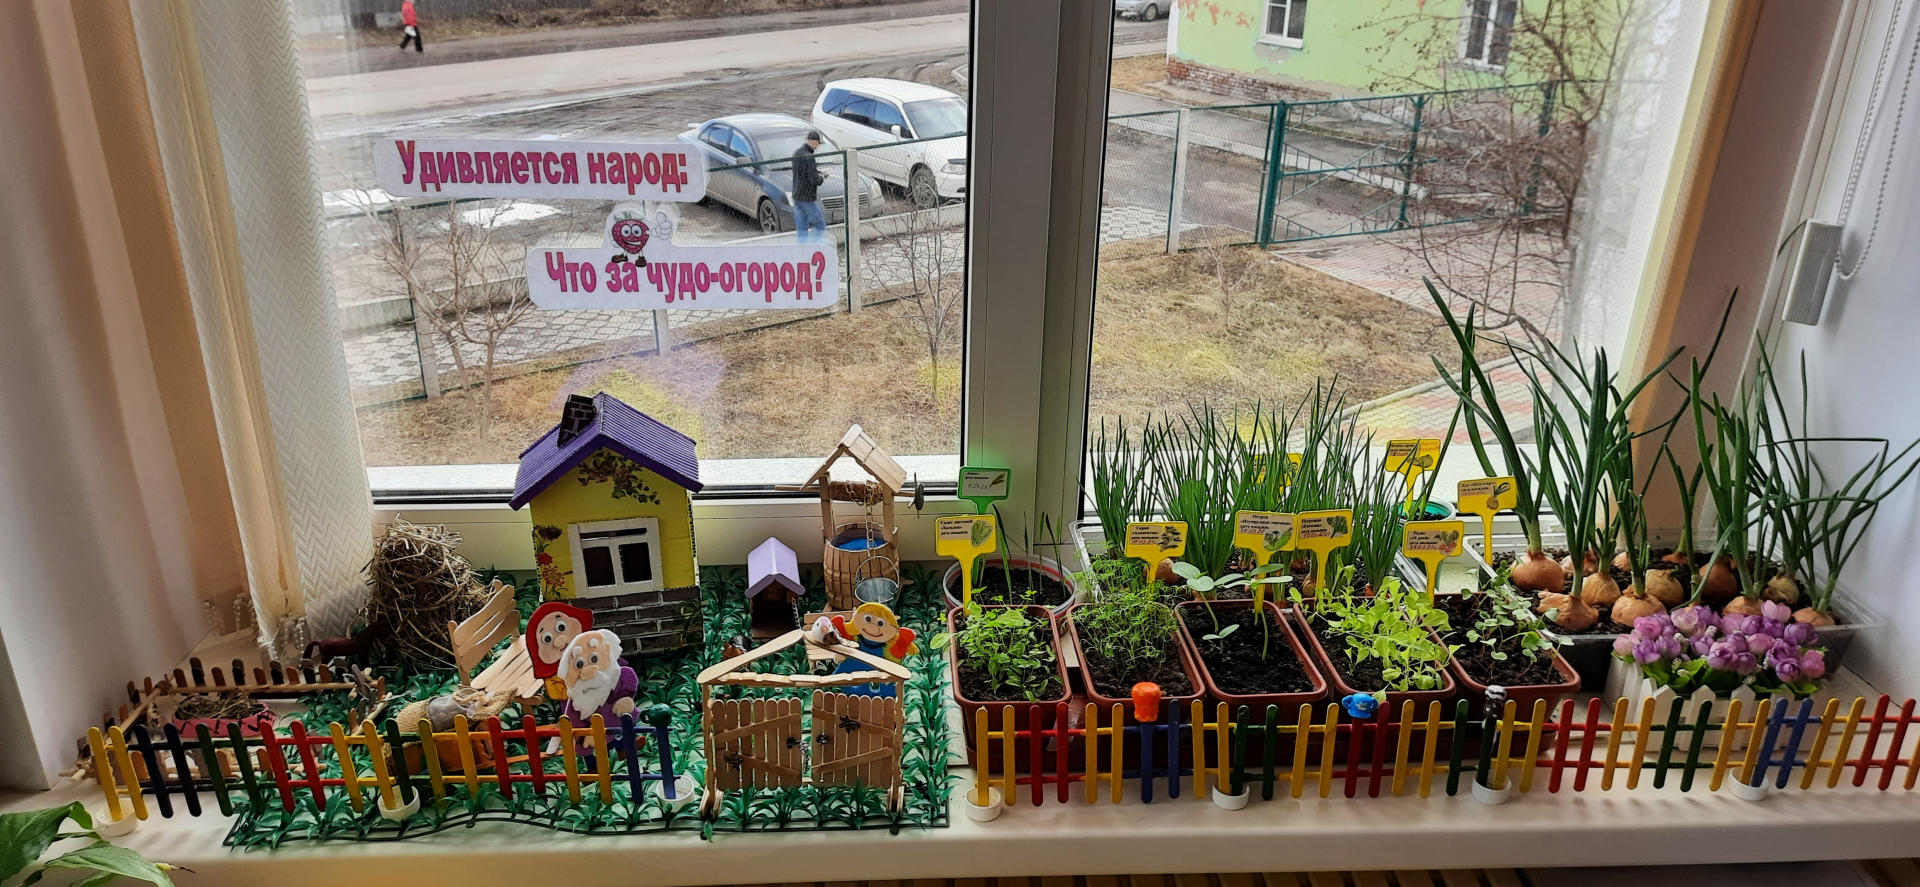 Огород на окне. Конкурс огород на окне. Конкурс огород на подоконнике в детском саду. Огород на окне название.